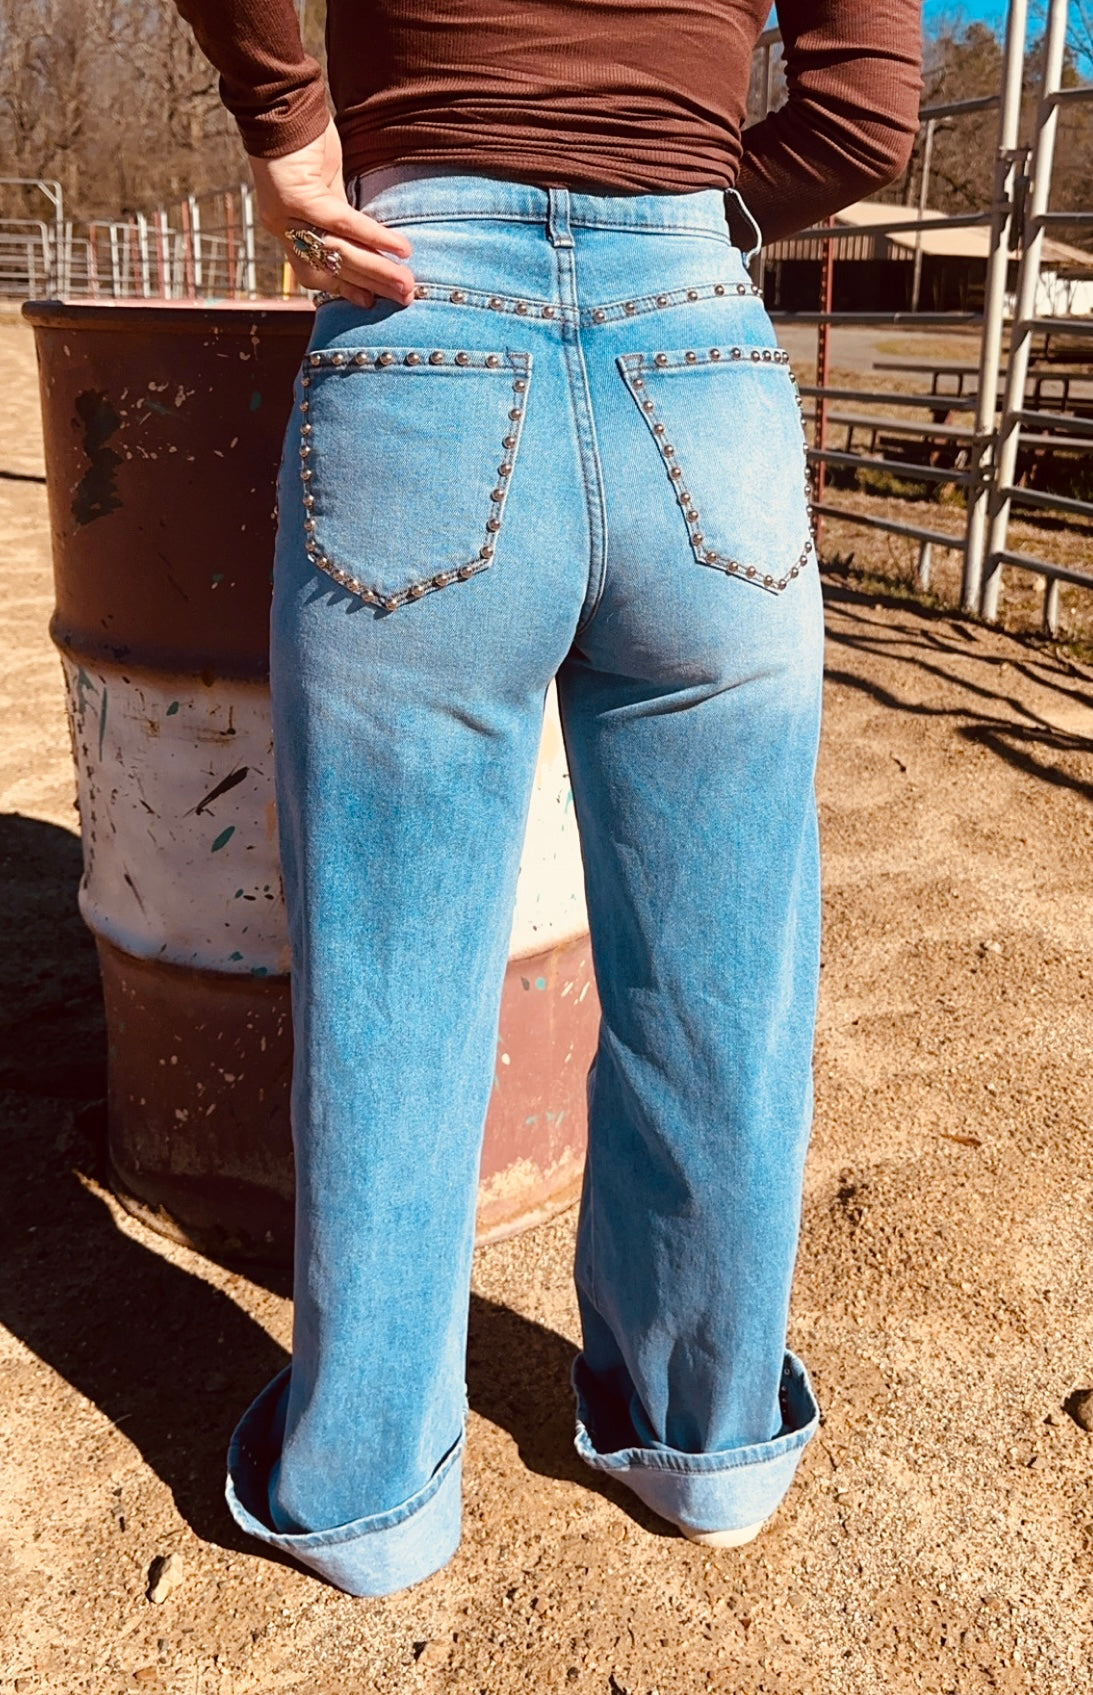 The Stud straight leg jeans